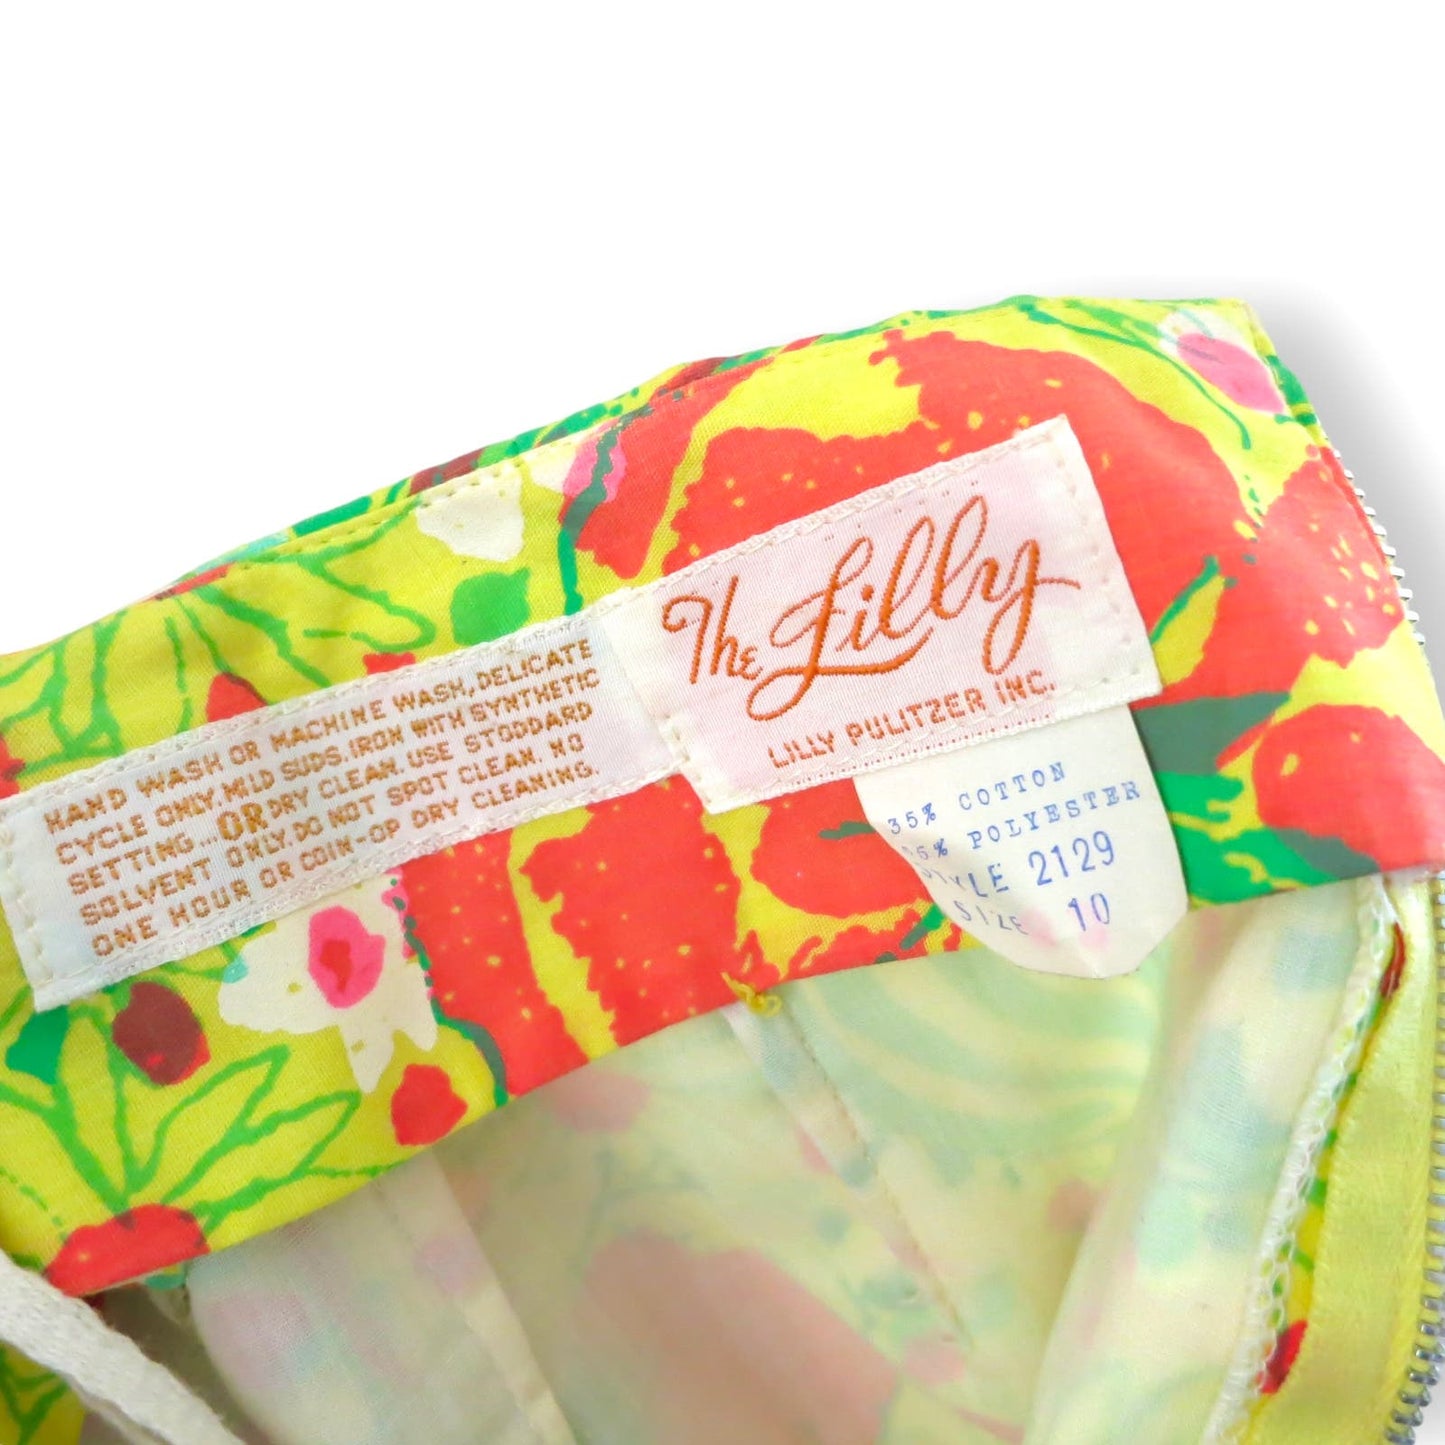 60s Vintage Lilly Pulitzer Poppy Floral A Line Mini Skirt Sz 6/8